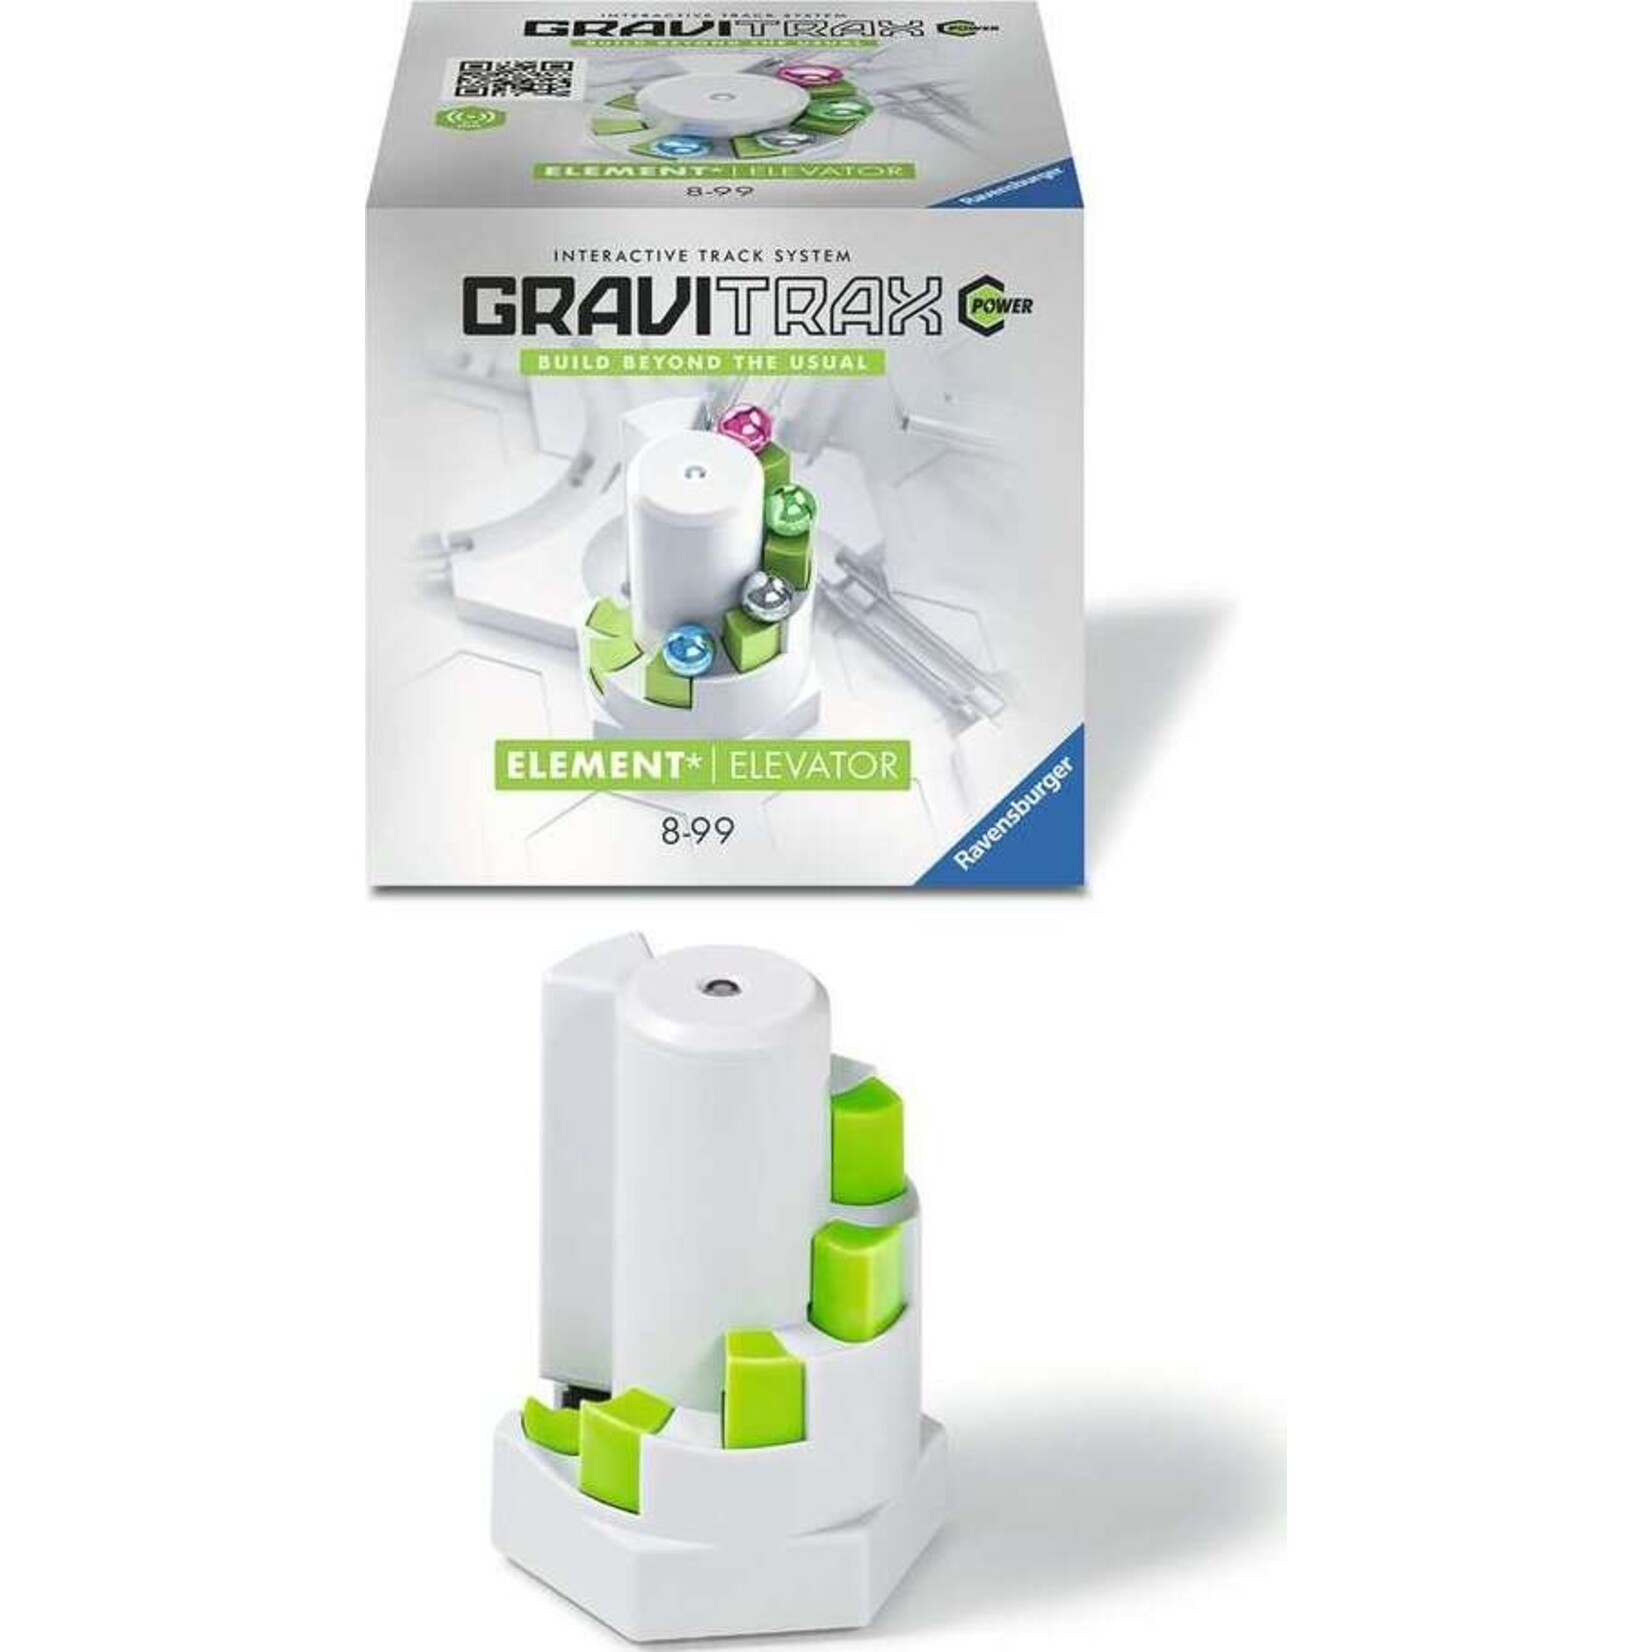 GraviTrax Power Elevator Expansion Kit